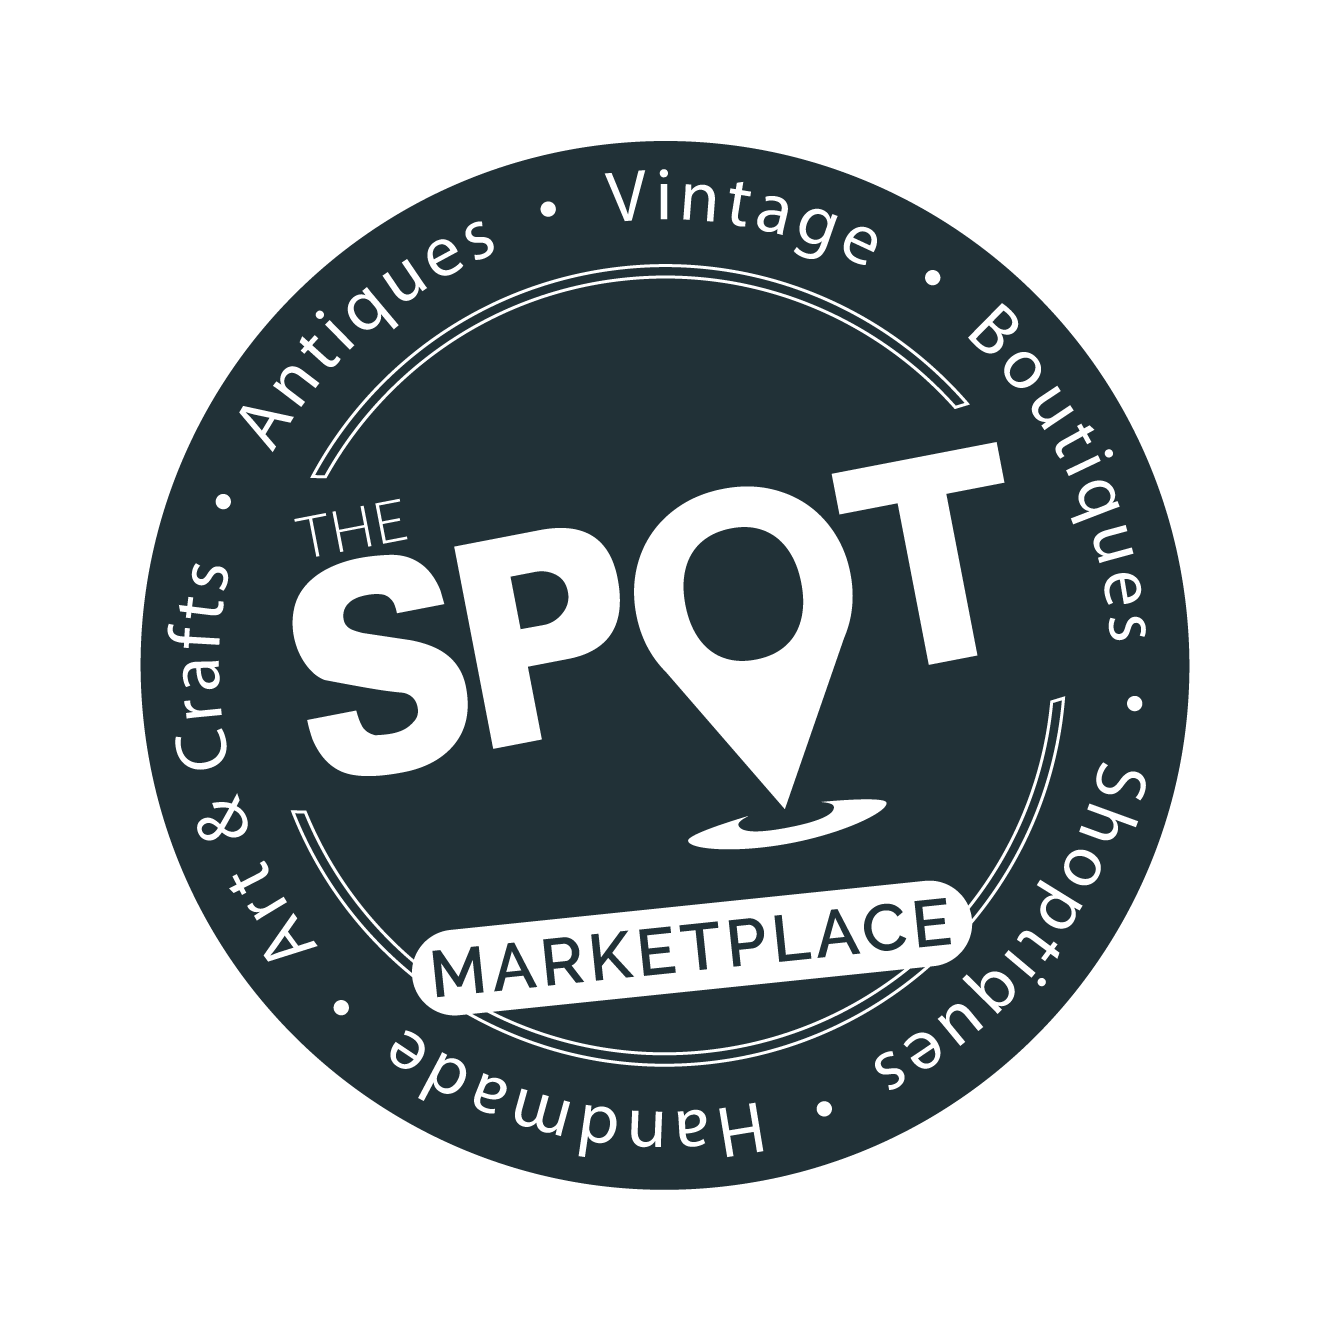 Thespot Logo - The Spot - The Spot